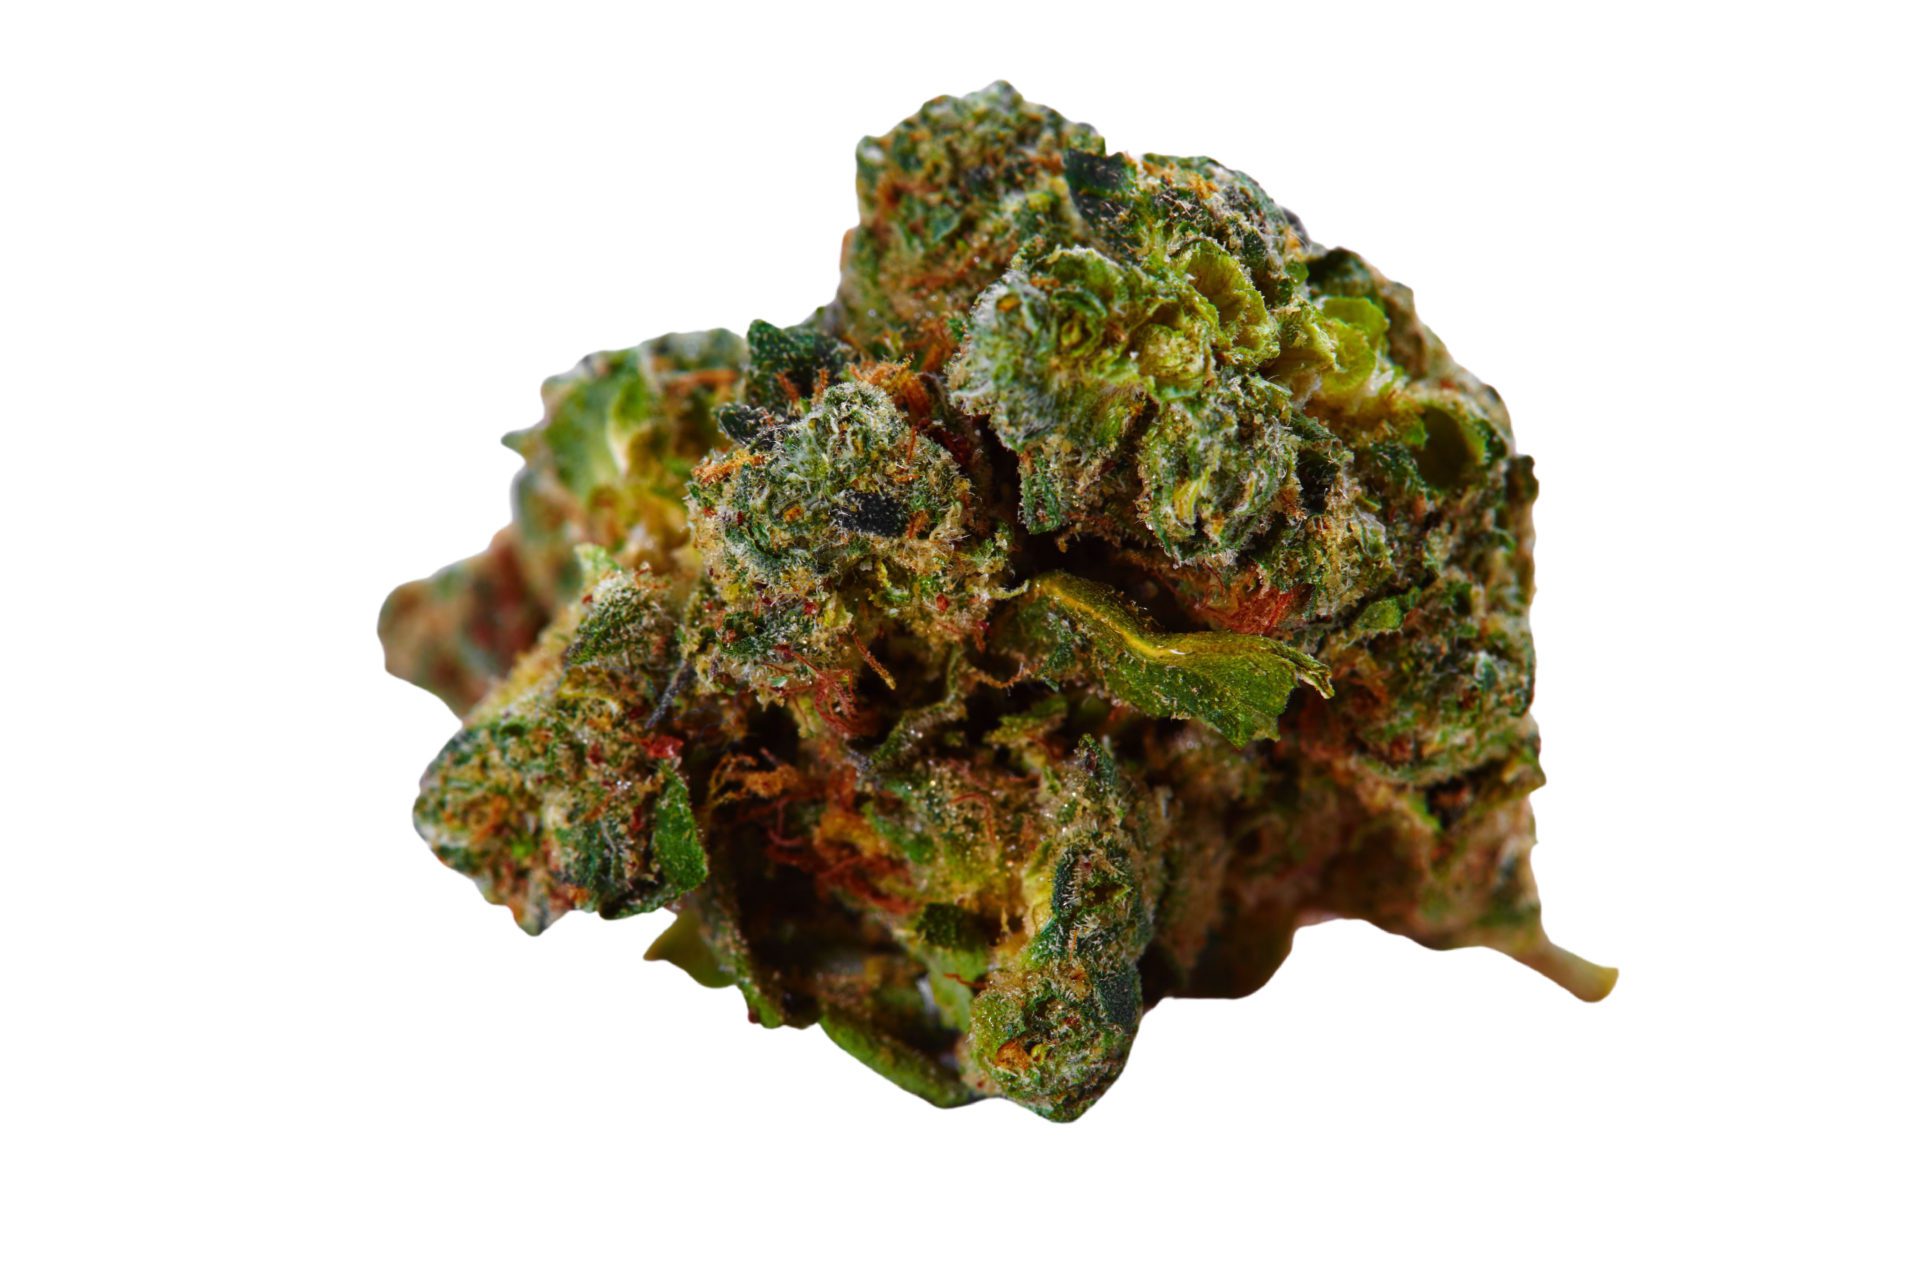 closeup of green crack marijuana nugget